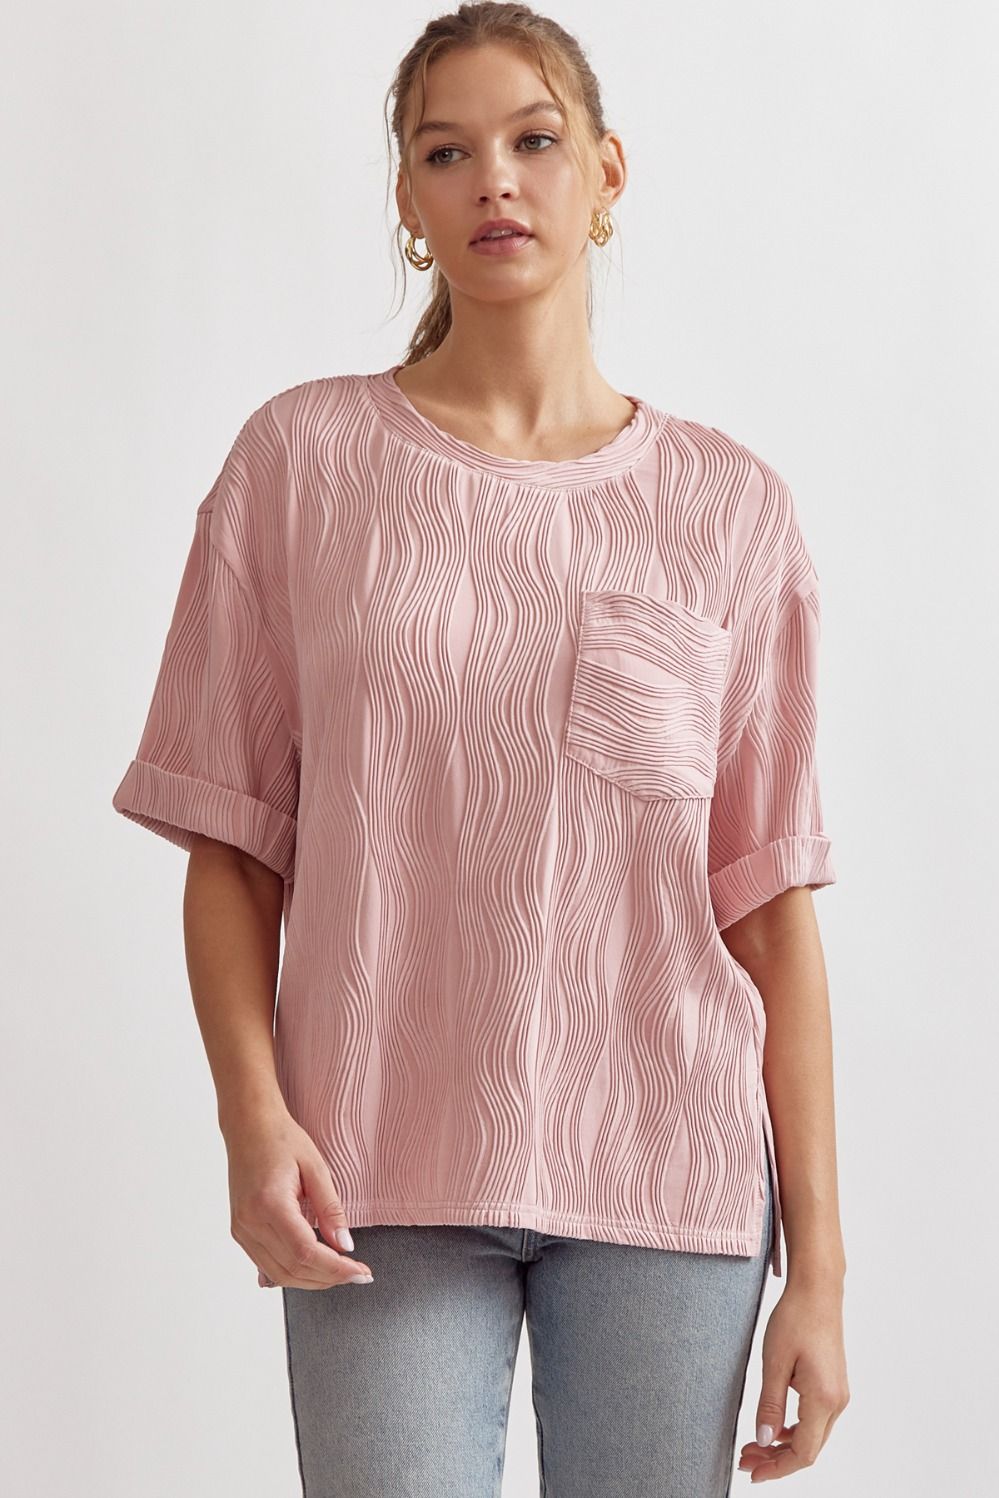 Caroline Wave Textured Short Sleeve Top - Blush Pink